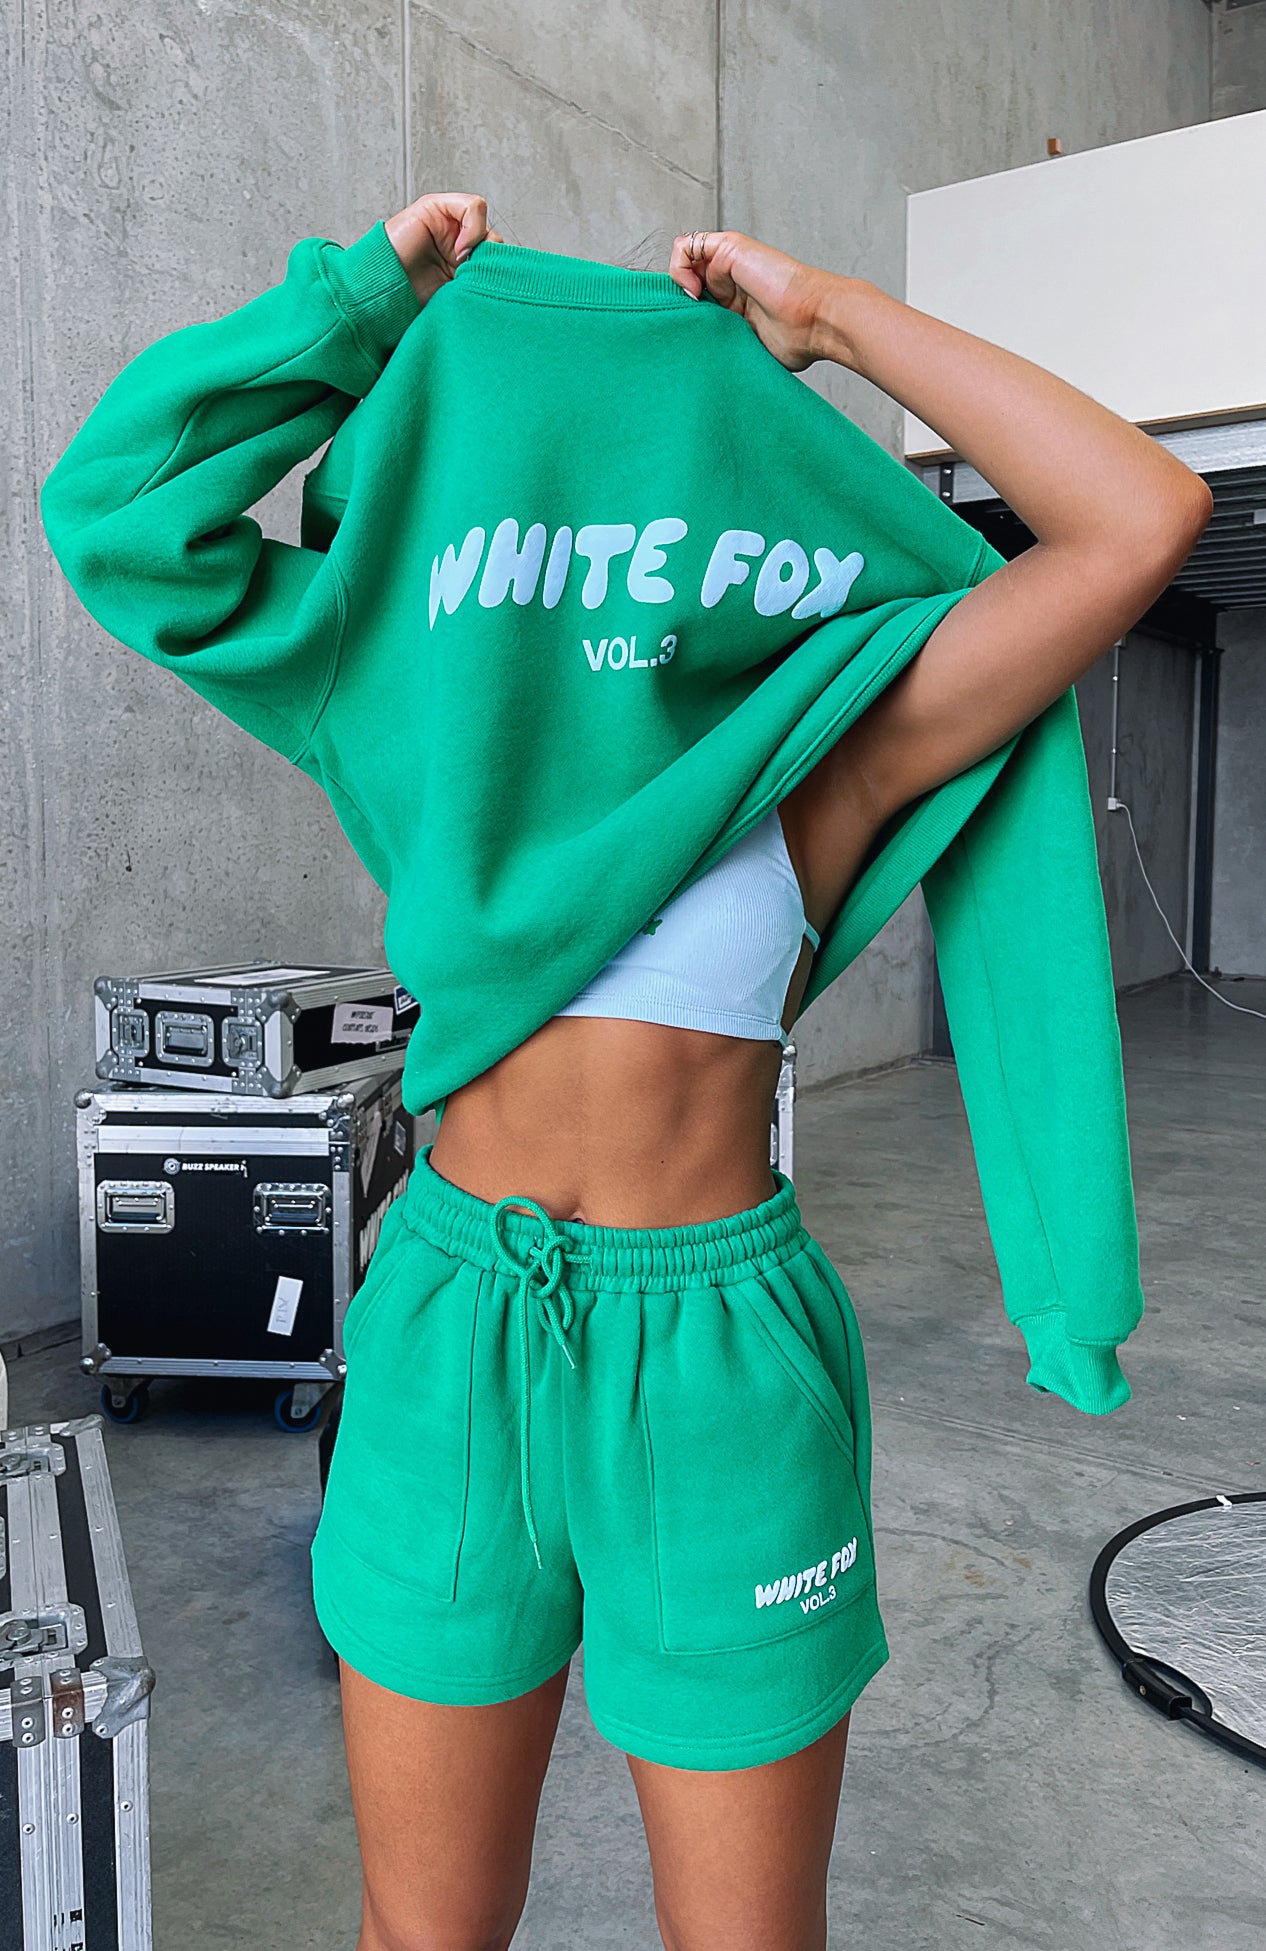 Offstage Lounge Shorts Amazon | White Fox Boutique